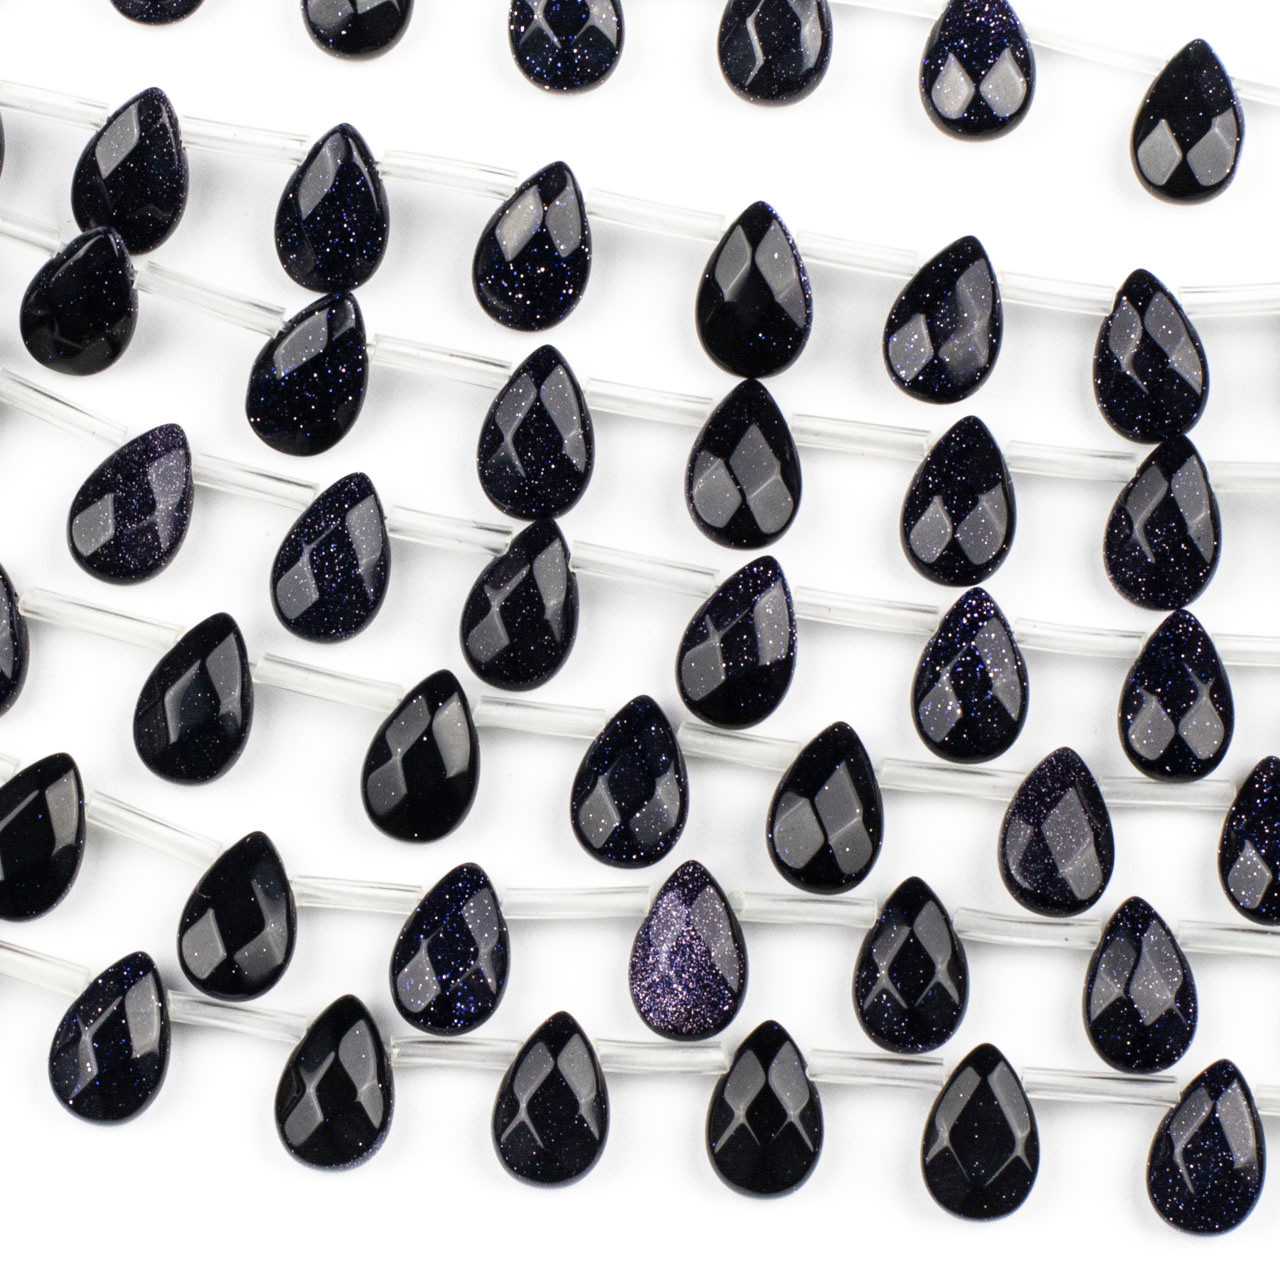 Teardrop Mother of Pearl Pendant Beads, Black Seed Beads Sterling